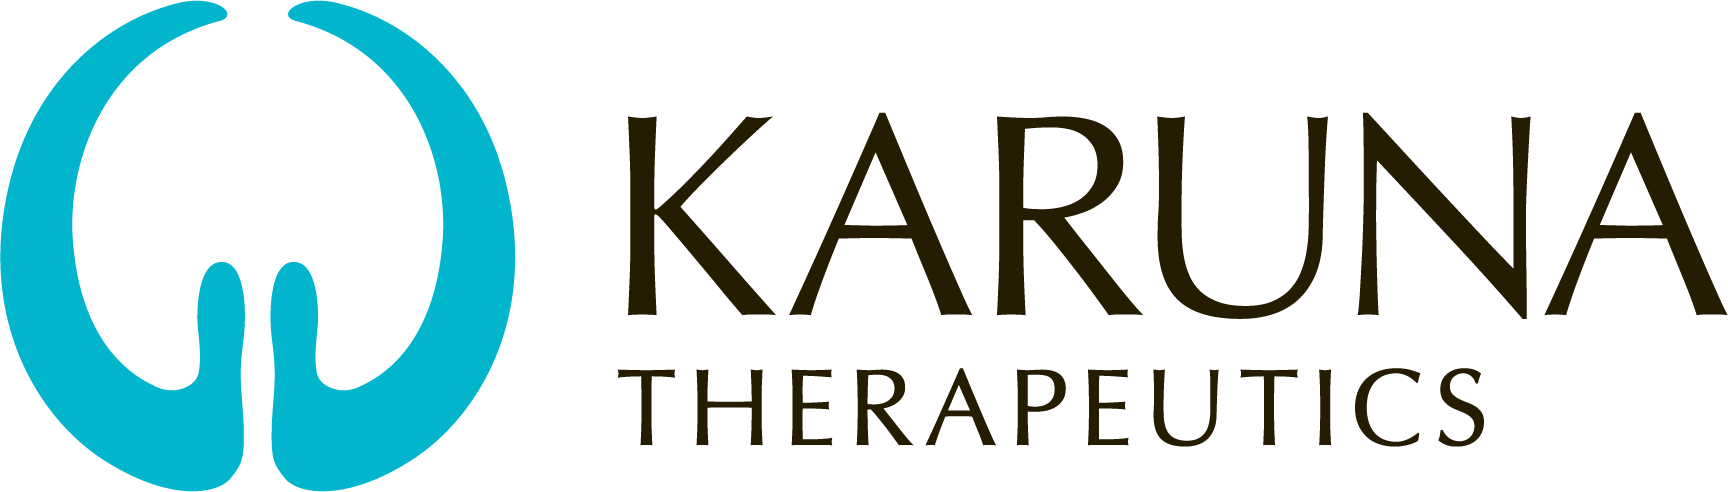 Karuna Therapeutics, Inc. logo